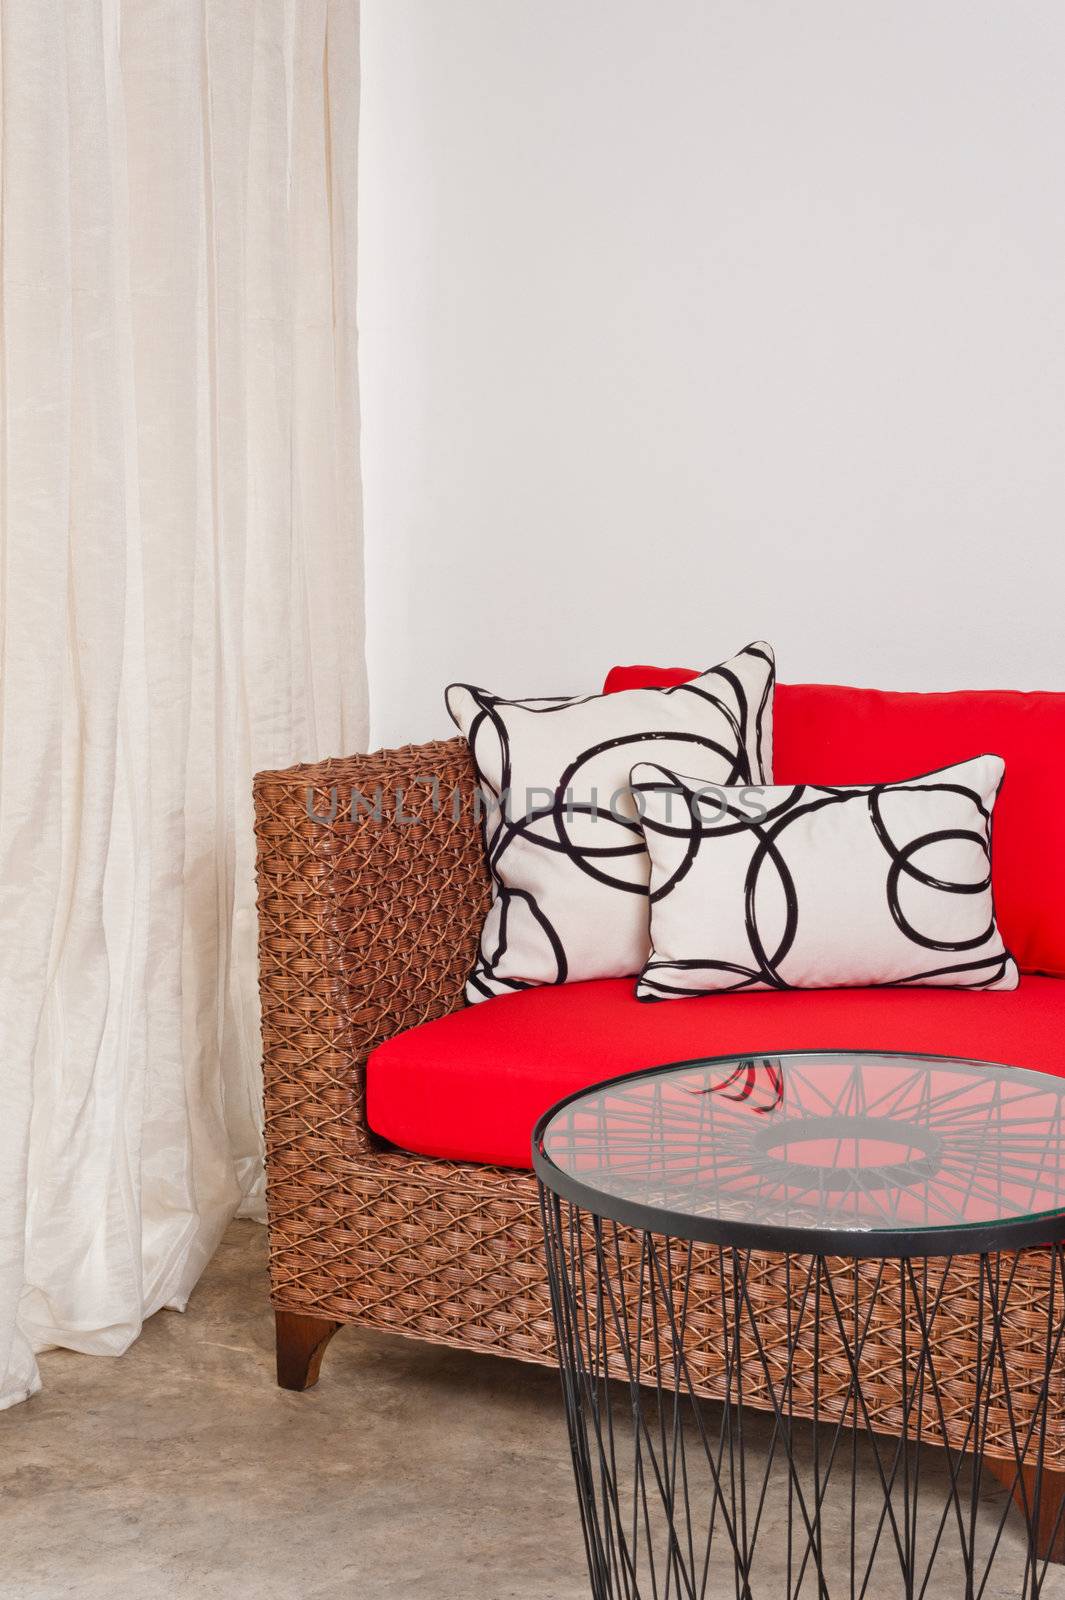 red brown basketwork sofa in interior setting 